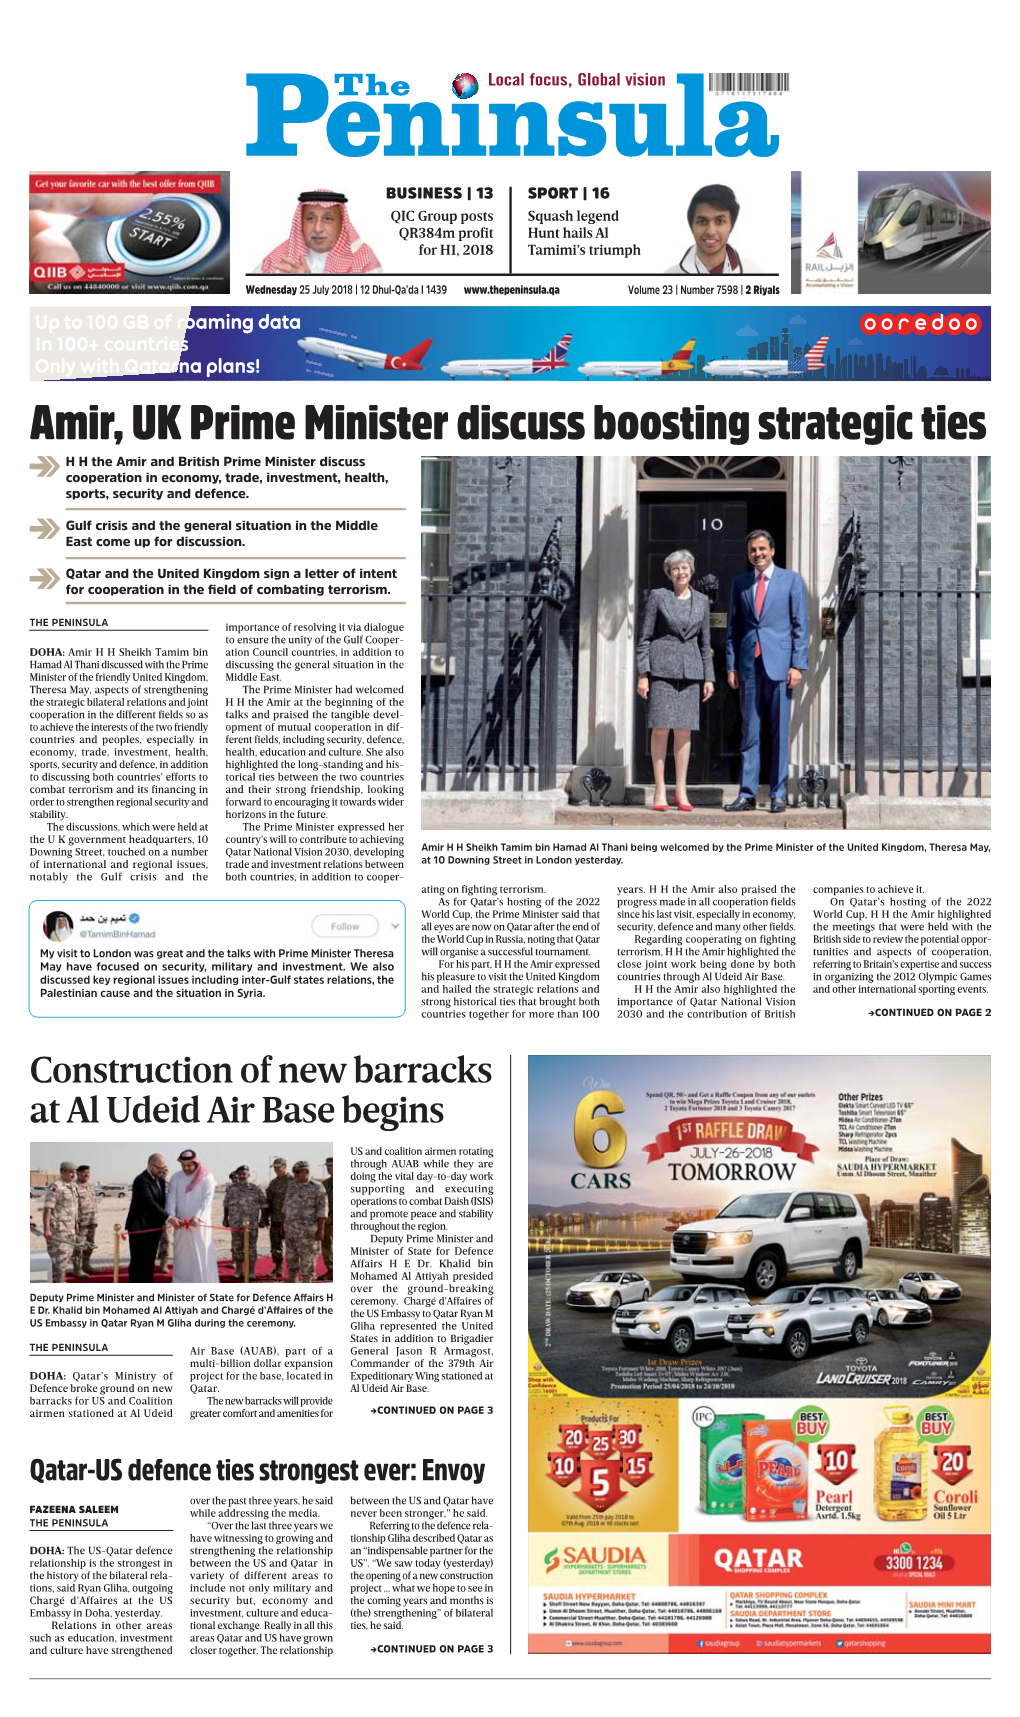 Amir, UK Prime Minister Discuss Boosting Strategic Ties